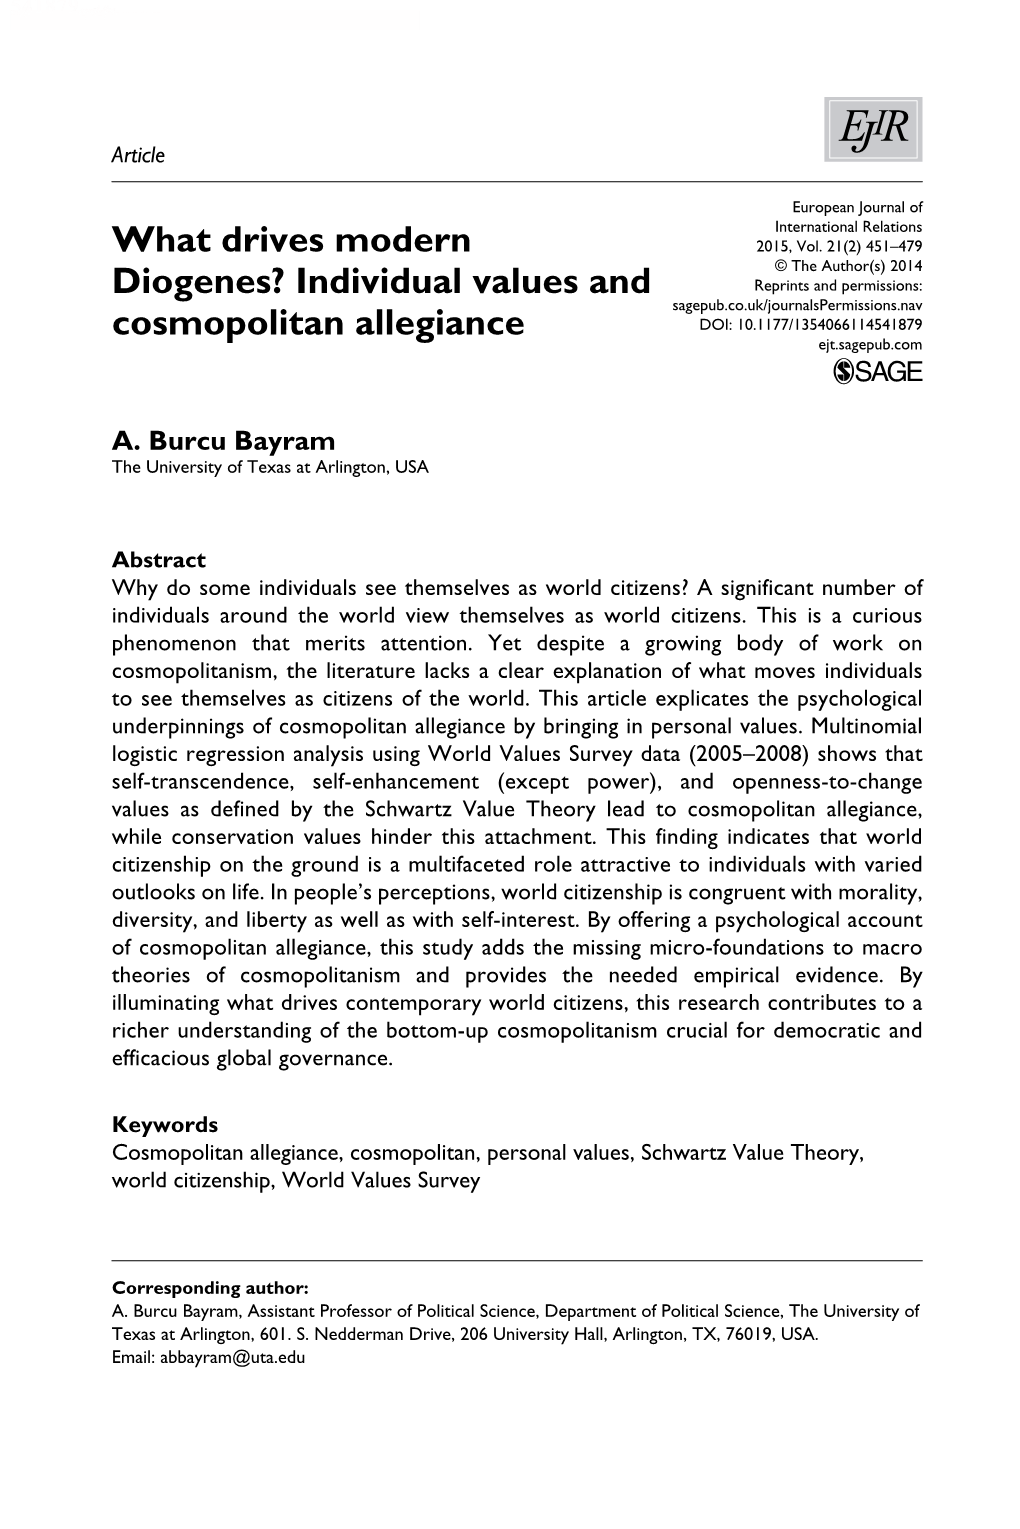 Individual Values and Cosmopolitan Allegiance